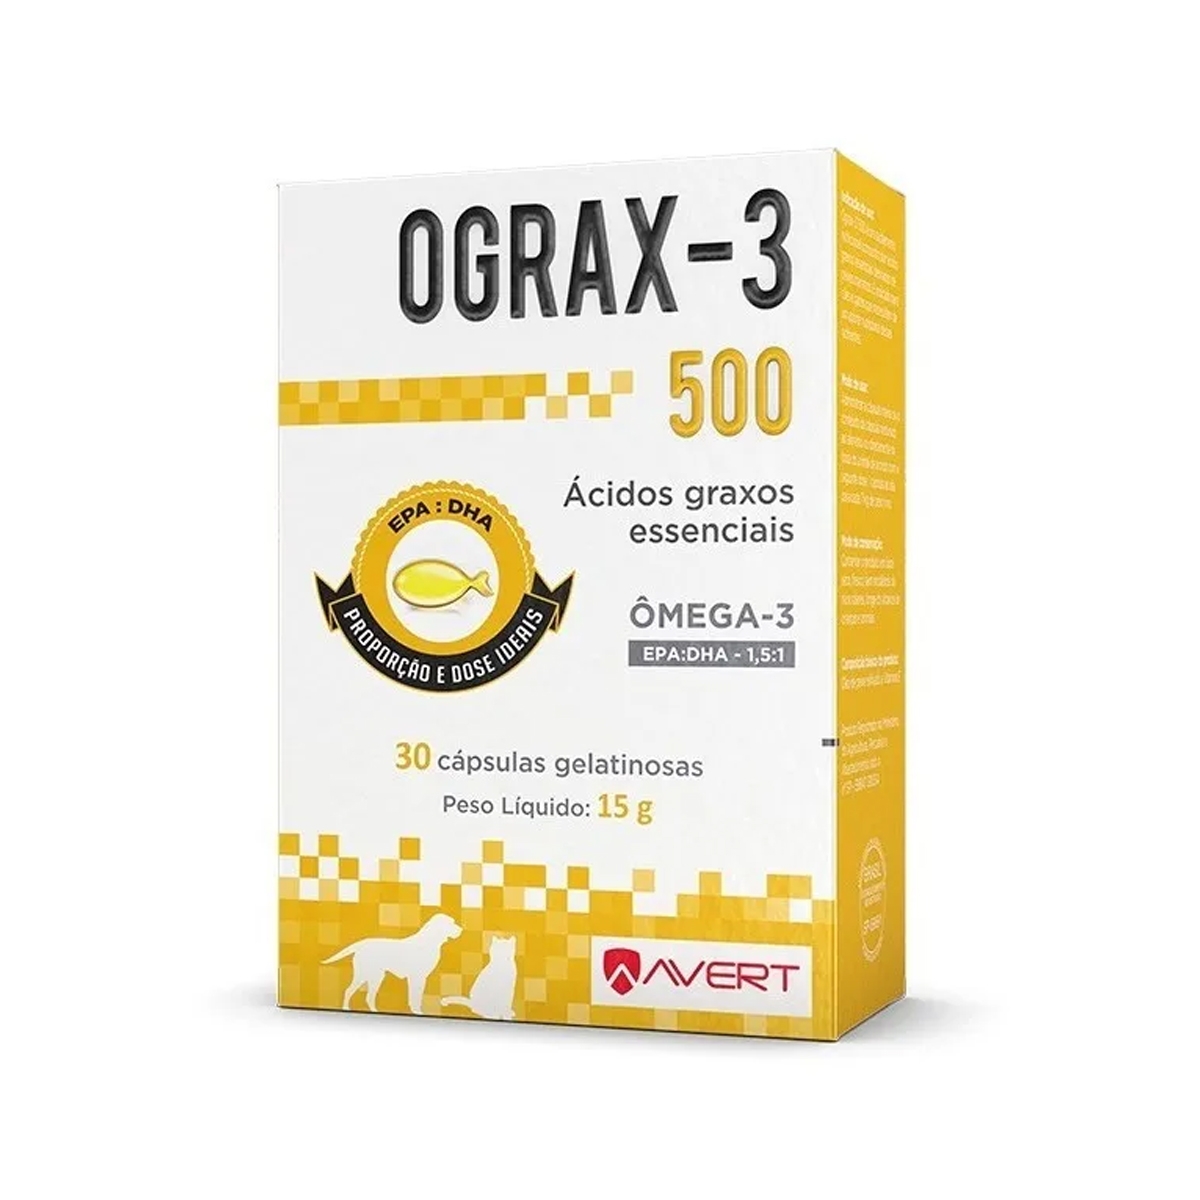 Ograx-3 500 Mg EPA+DHA 30 Capsulas